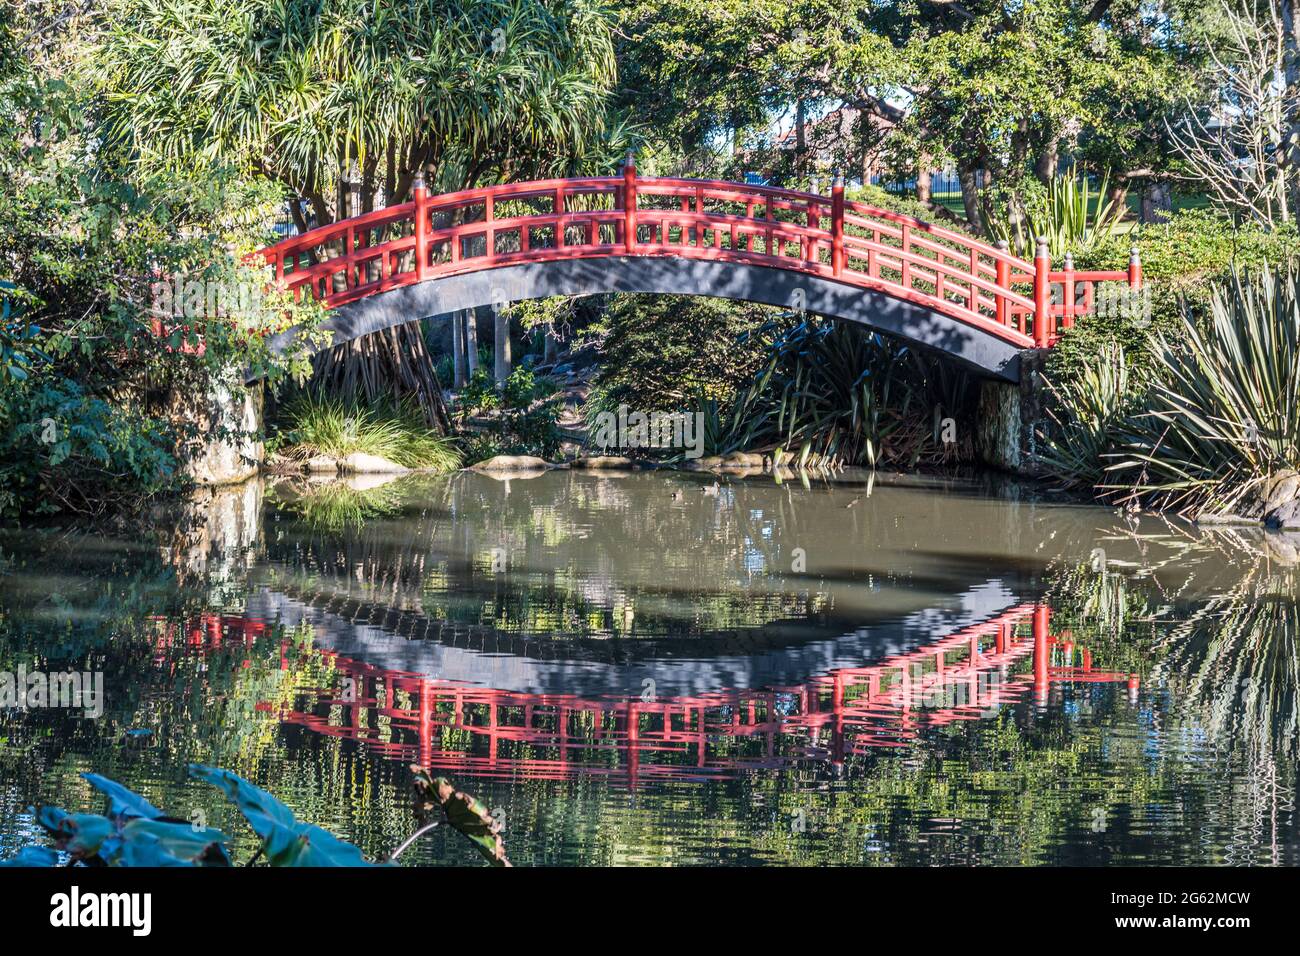 Kawasaki Bridge Wollongong Botanic Gardens Stock Photo